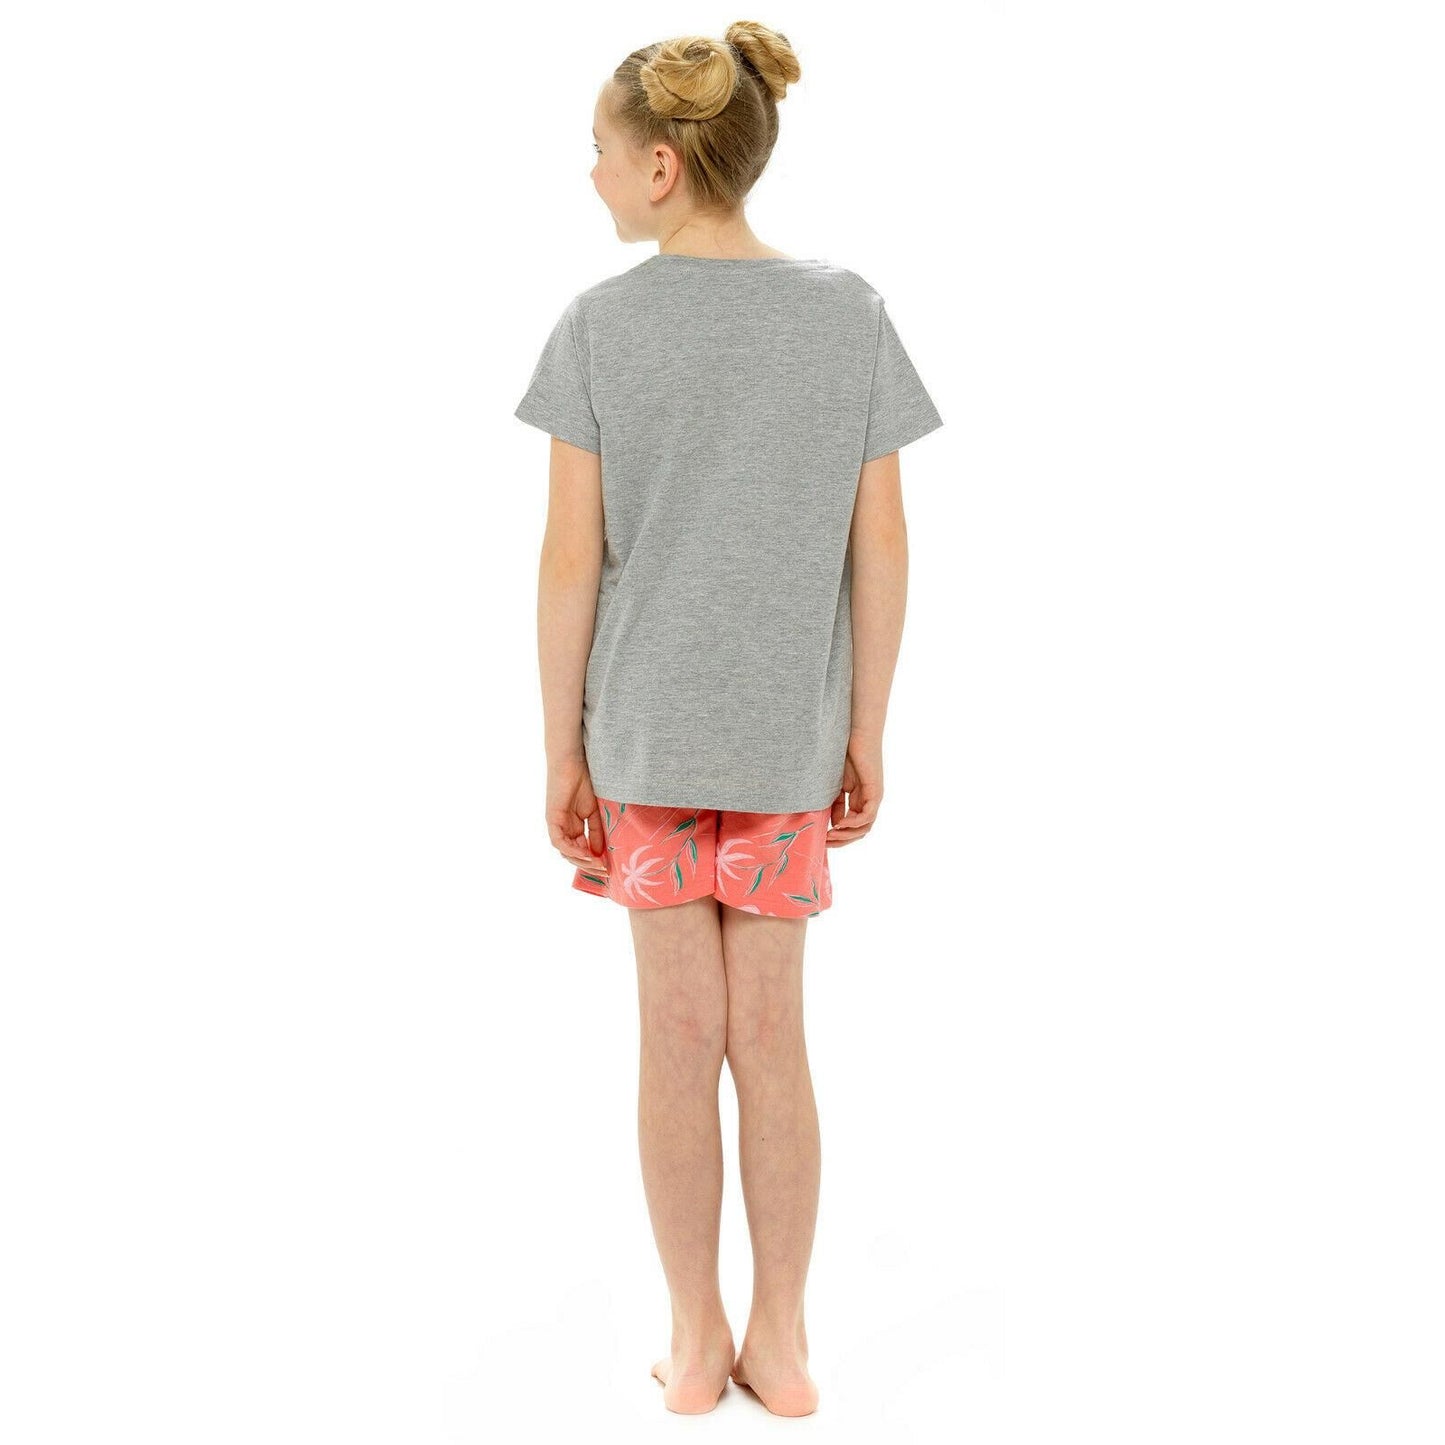 Childrens Sloth or Koala Design Shorts Pyjama Set ~ 7-13 years